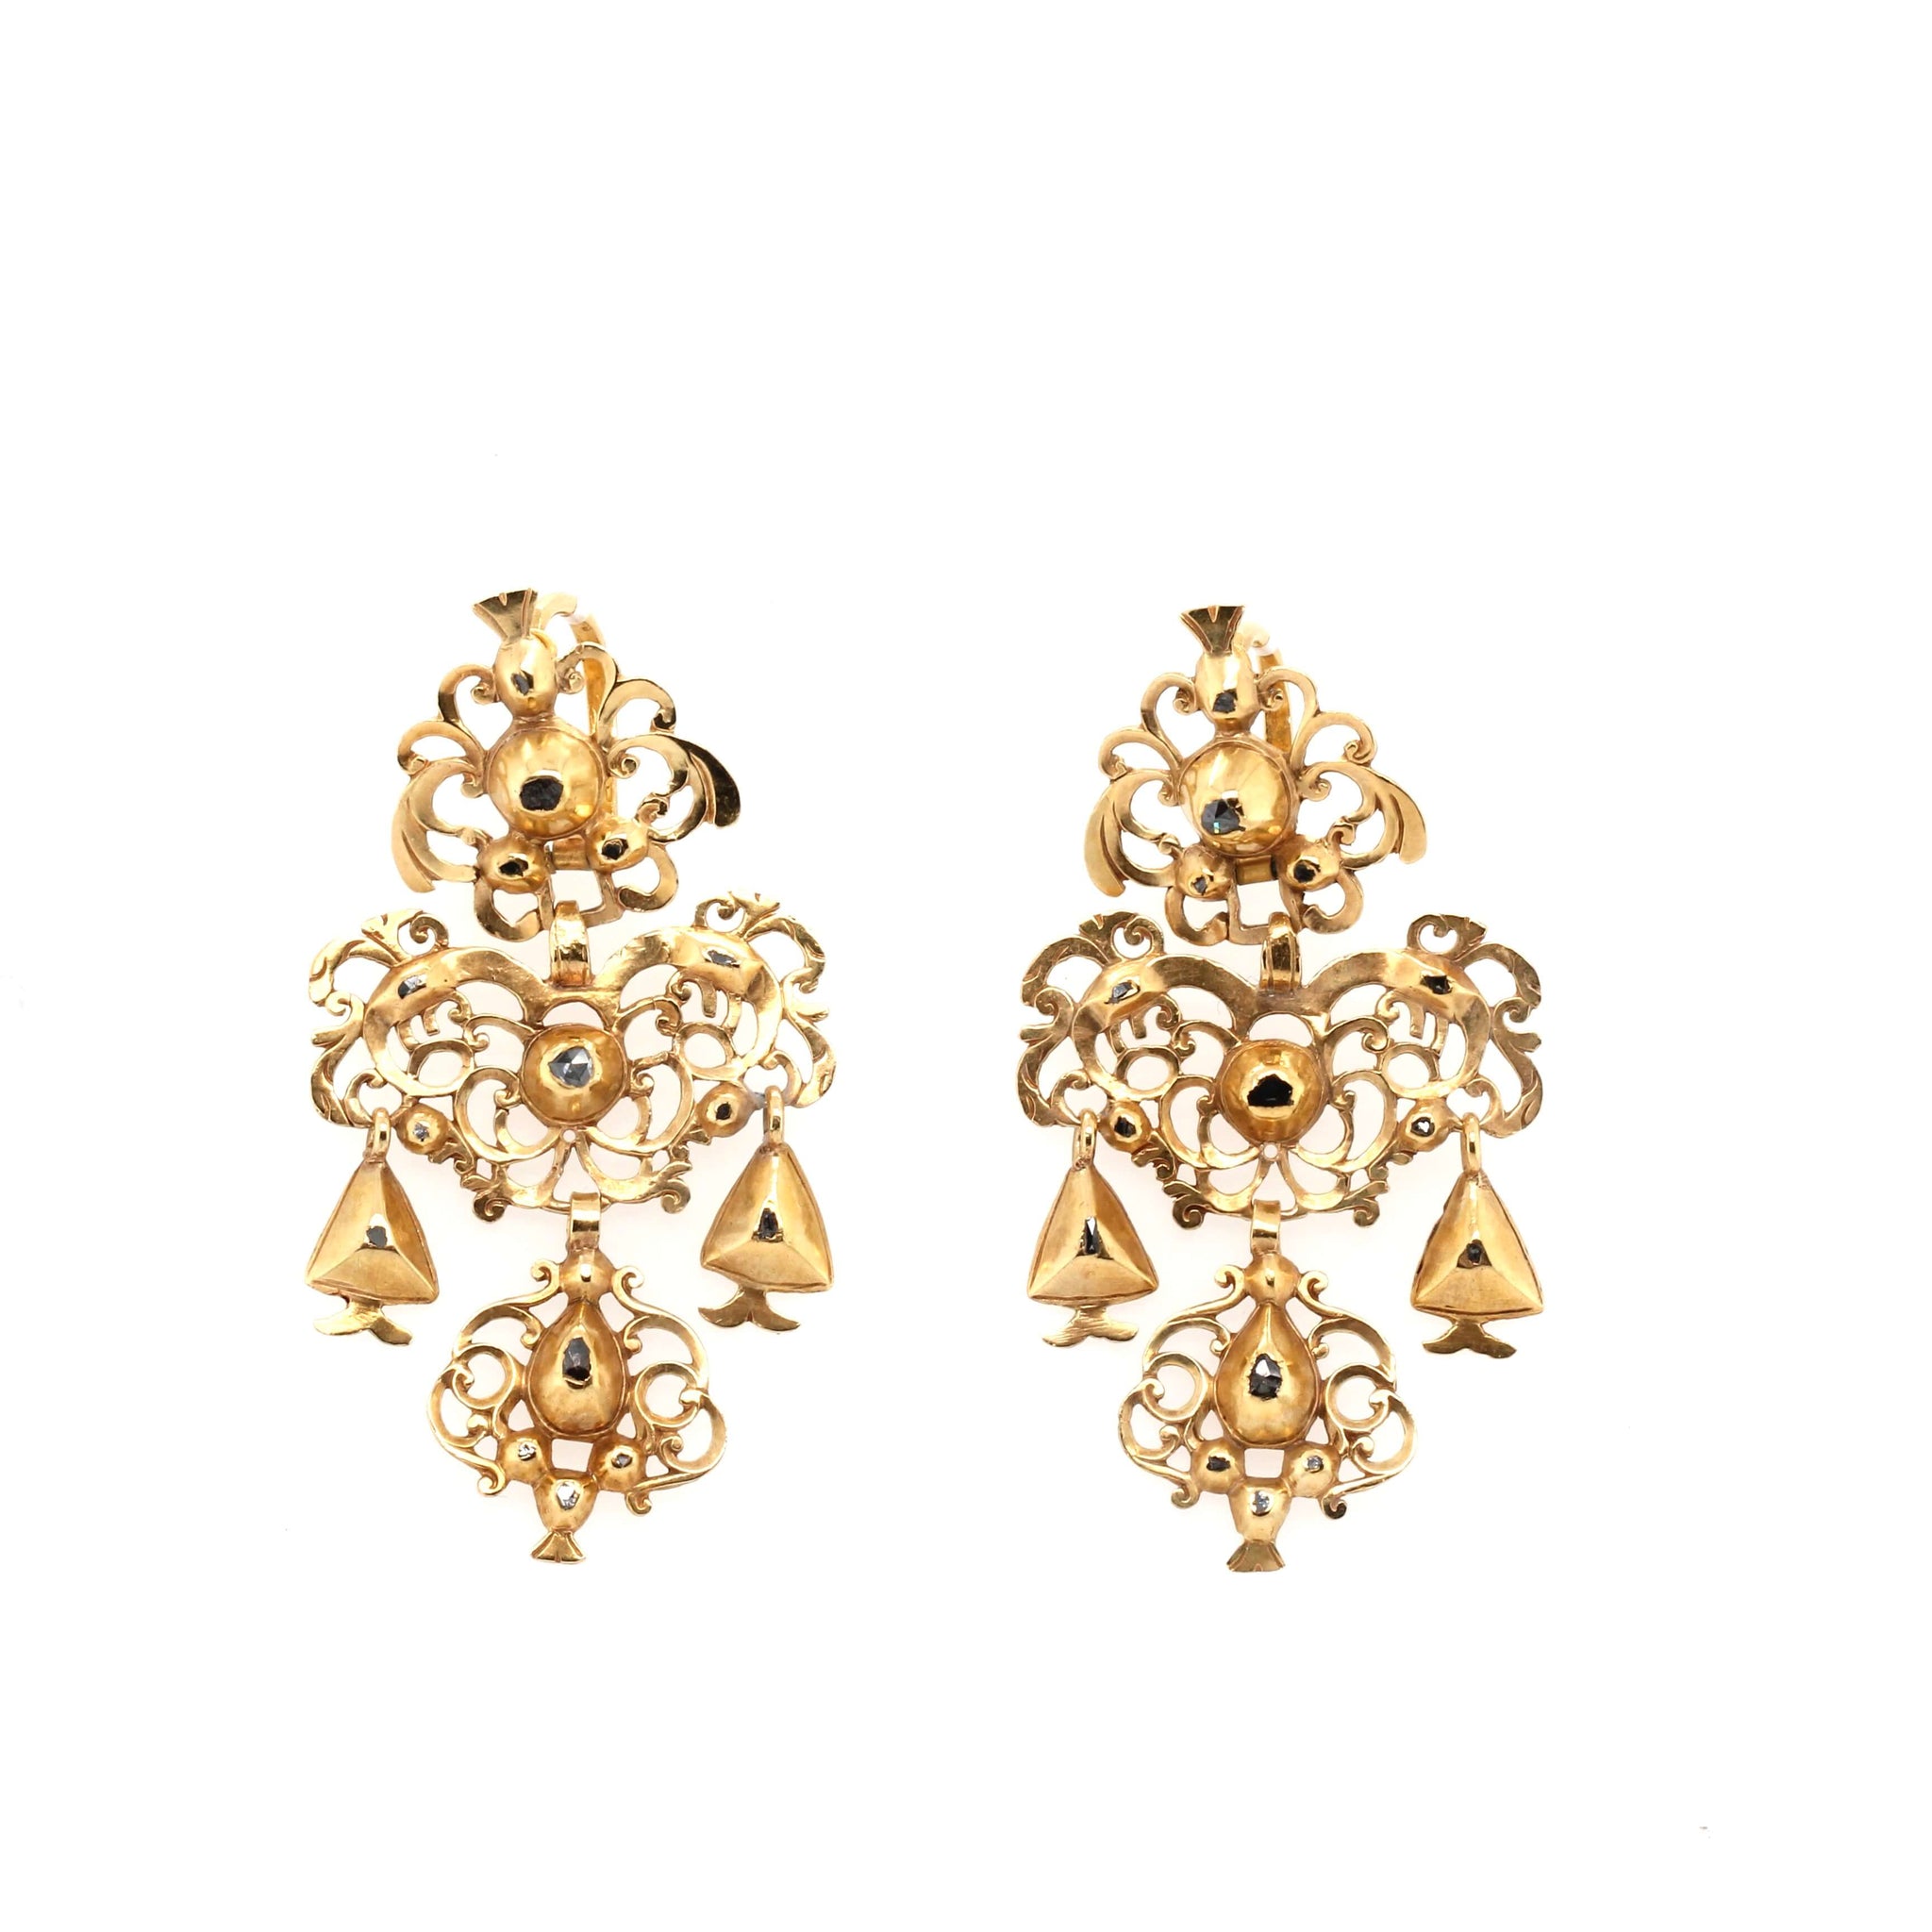 Iberian Gold and Diamond Earrings